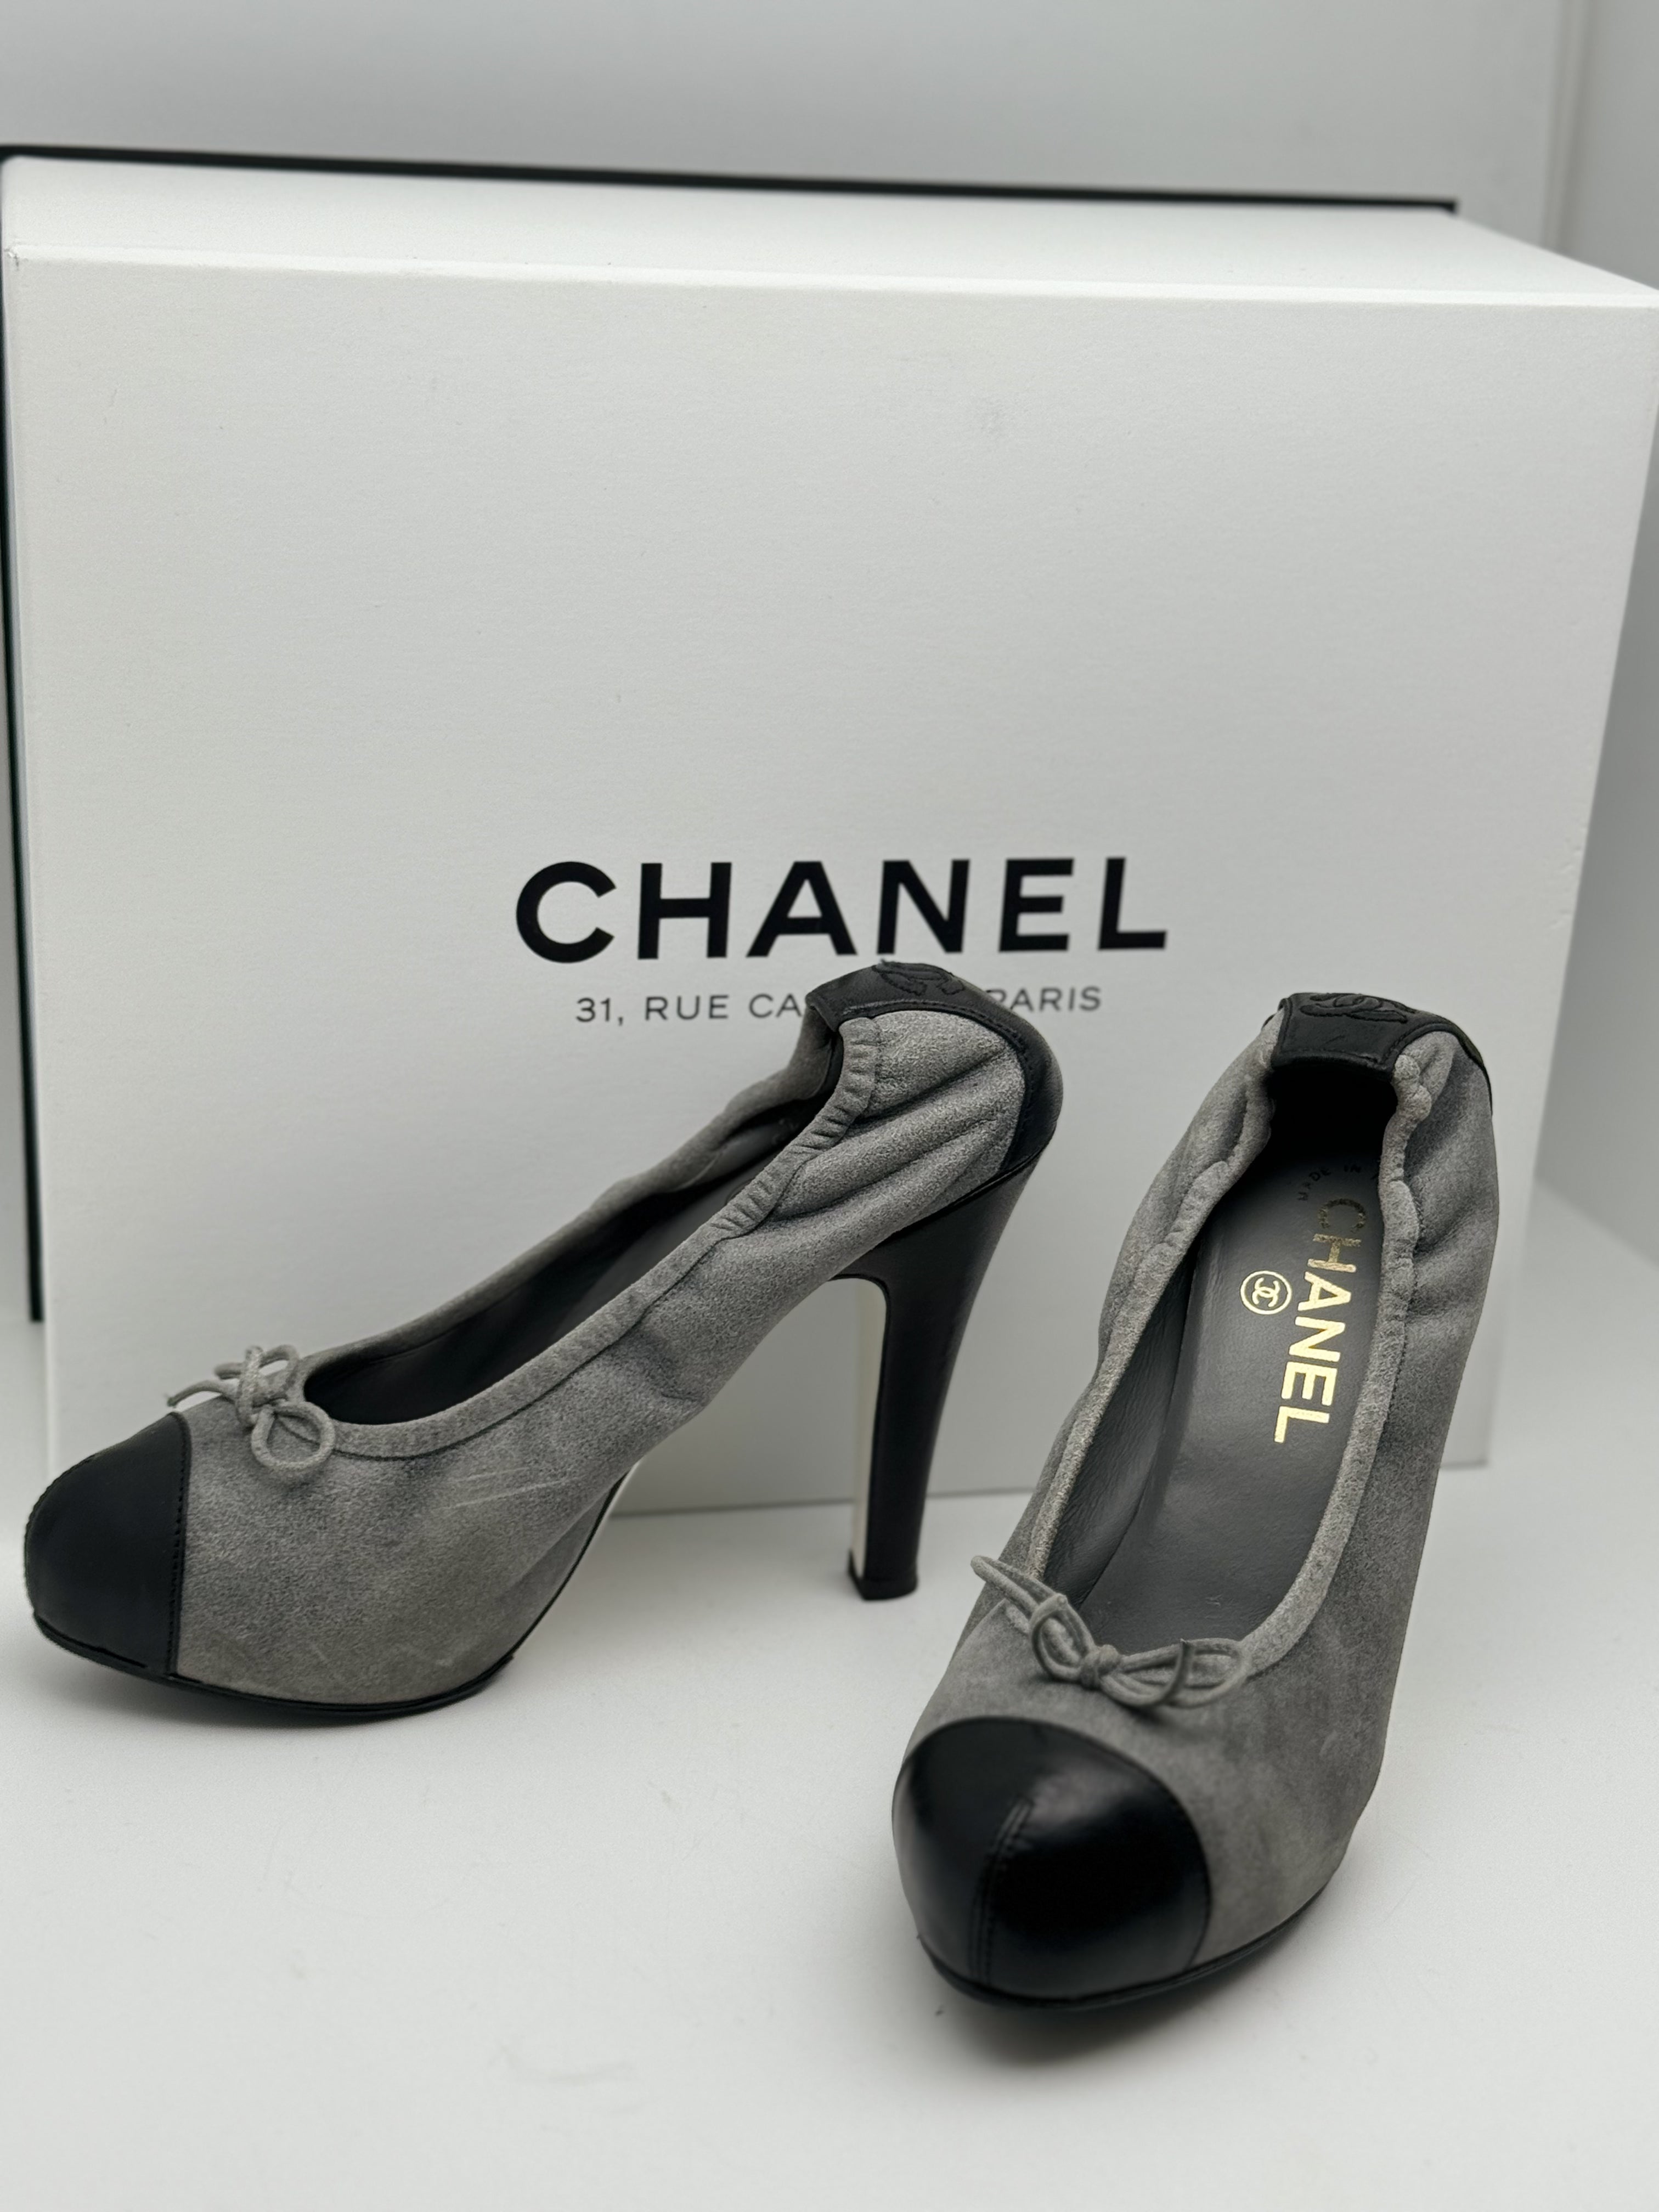 Chanel-Ballerina pumps